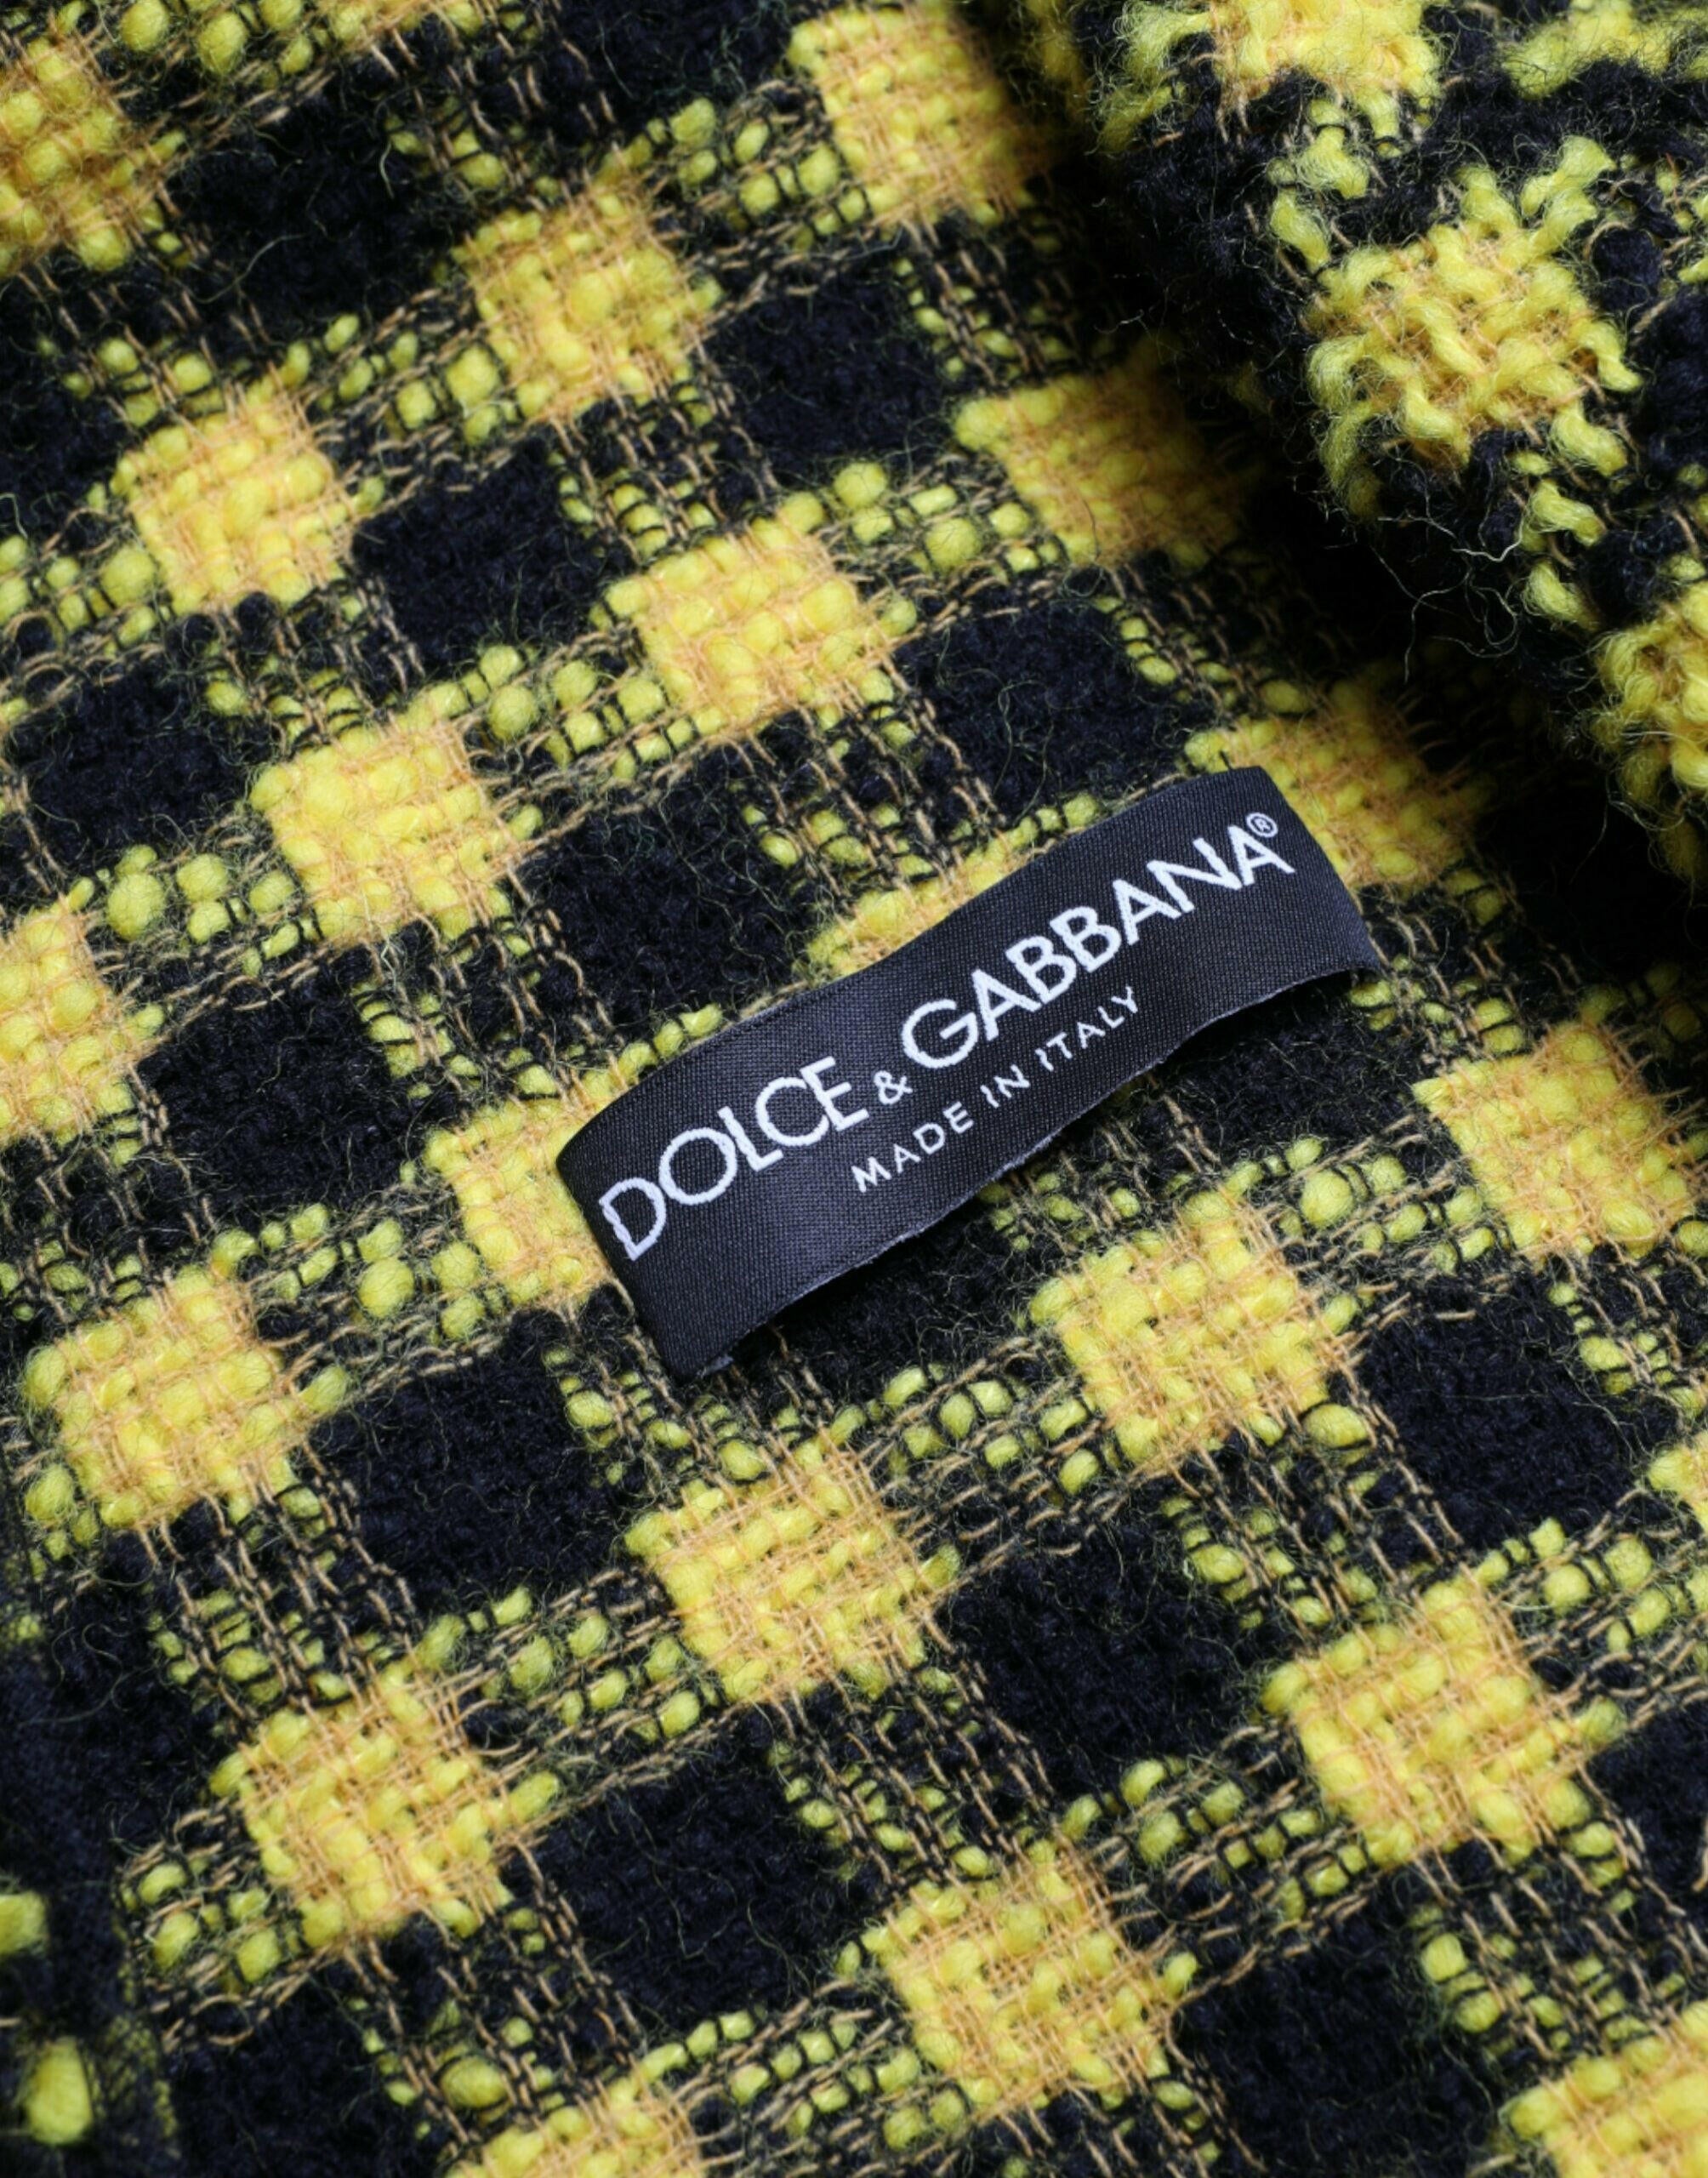 Dolce & Gabbana Chic Houndstooth Virgin Wool Long Coat.